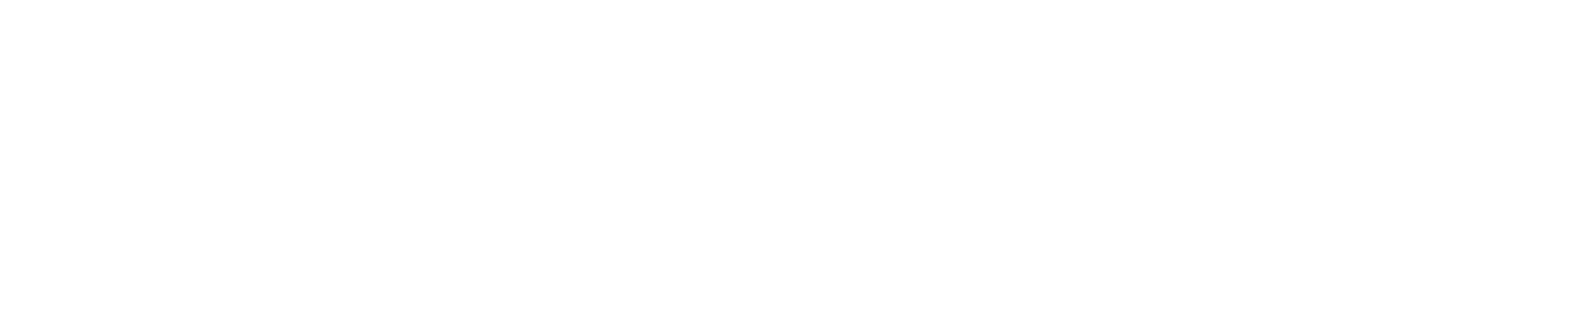 PCB Bancorp logo large for dark backgrounds (transparent PNG)